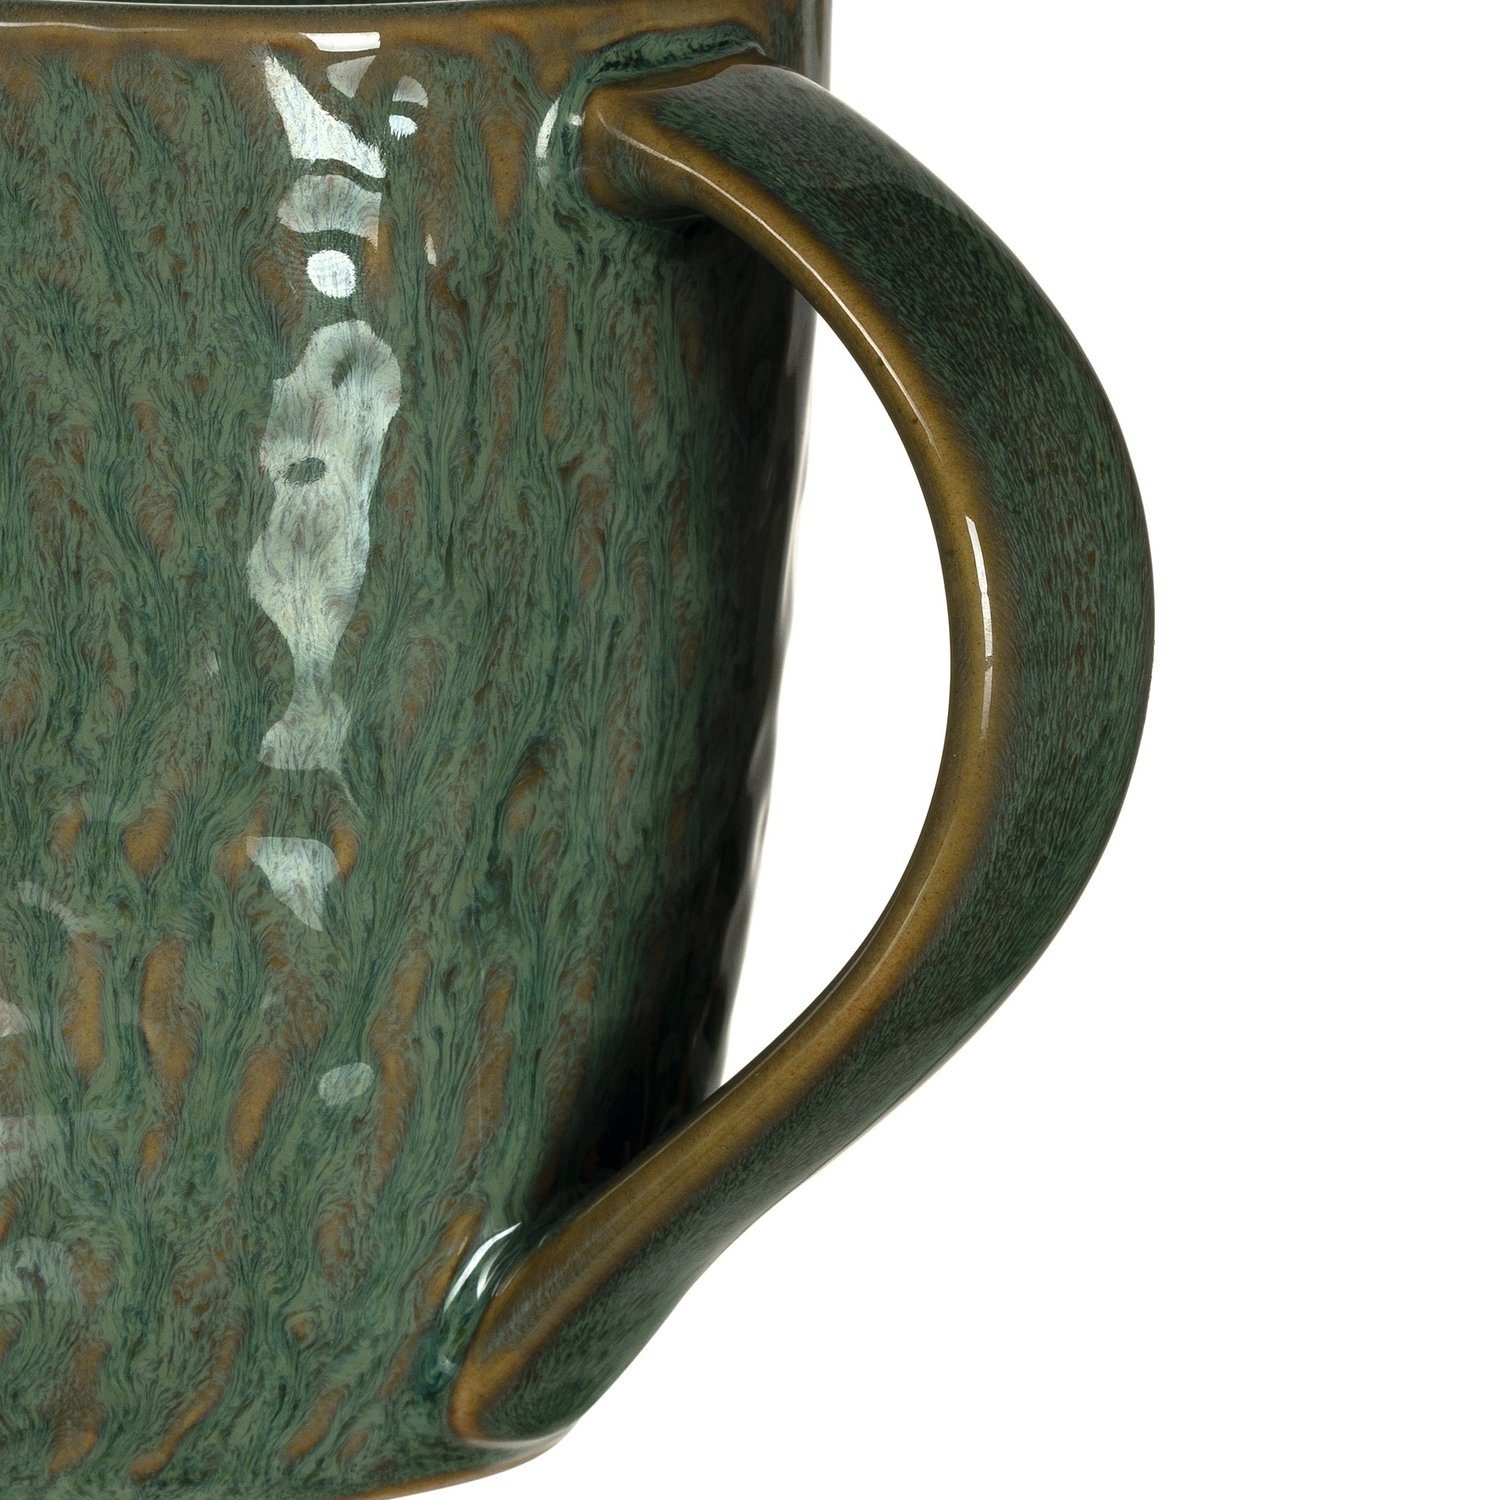 ml, Matera, LEONARDO grün 430 6-teilig Becher Keramik,